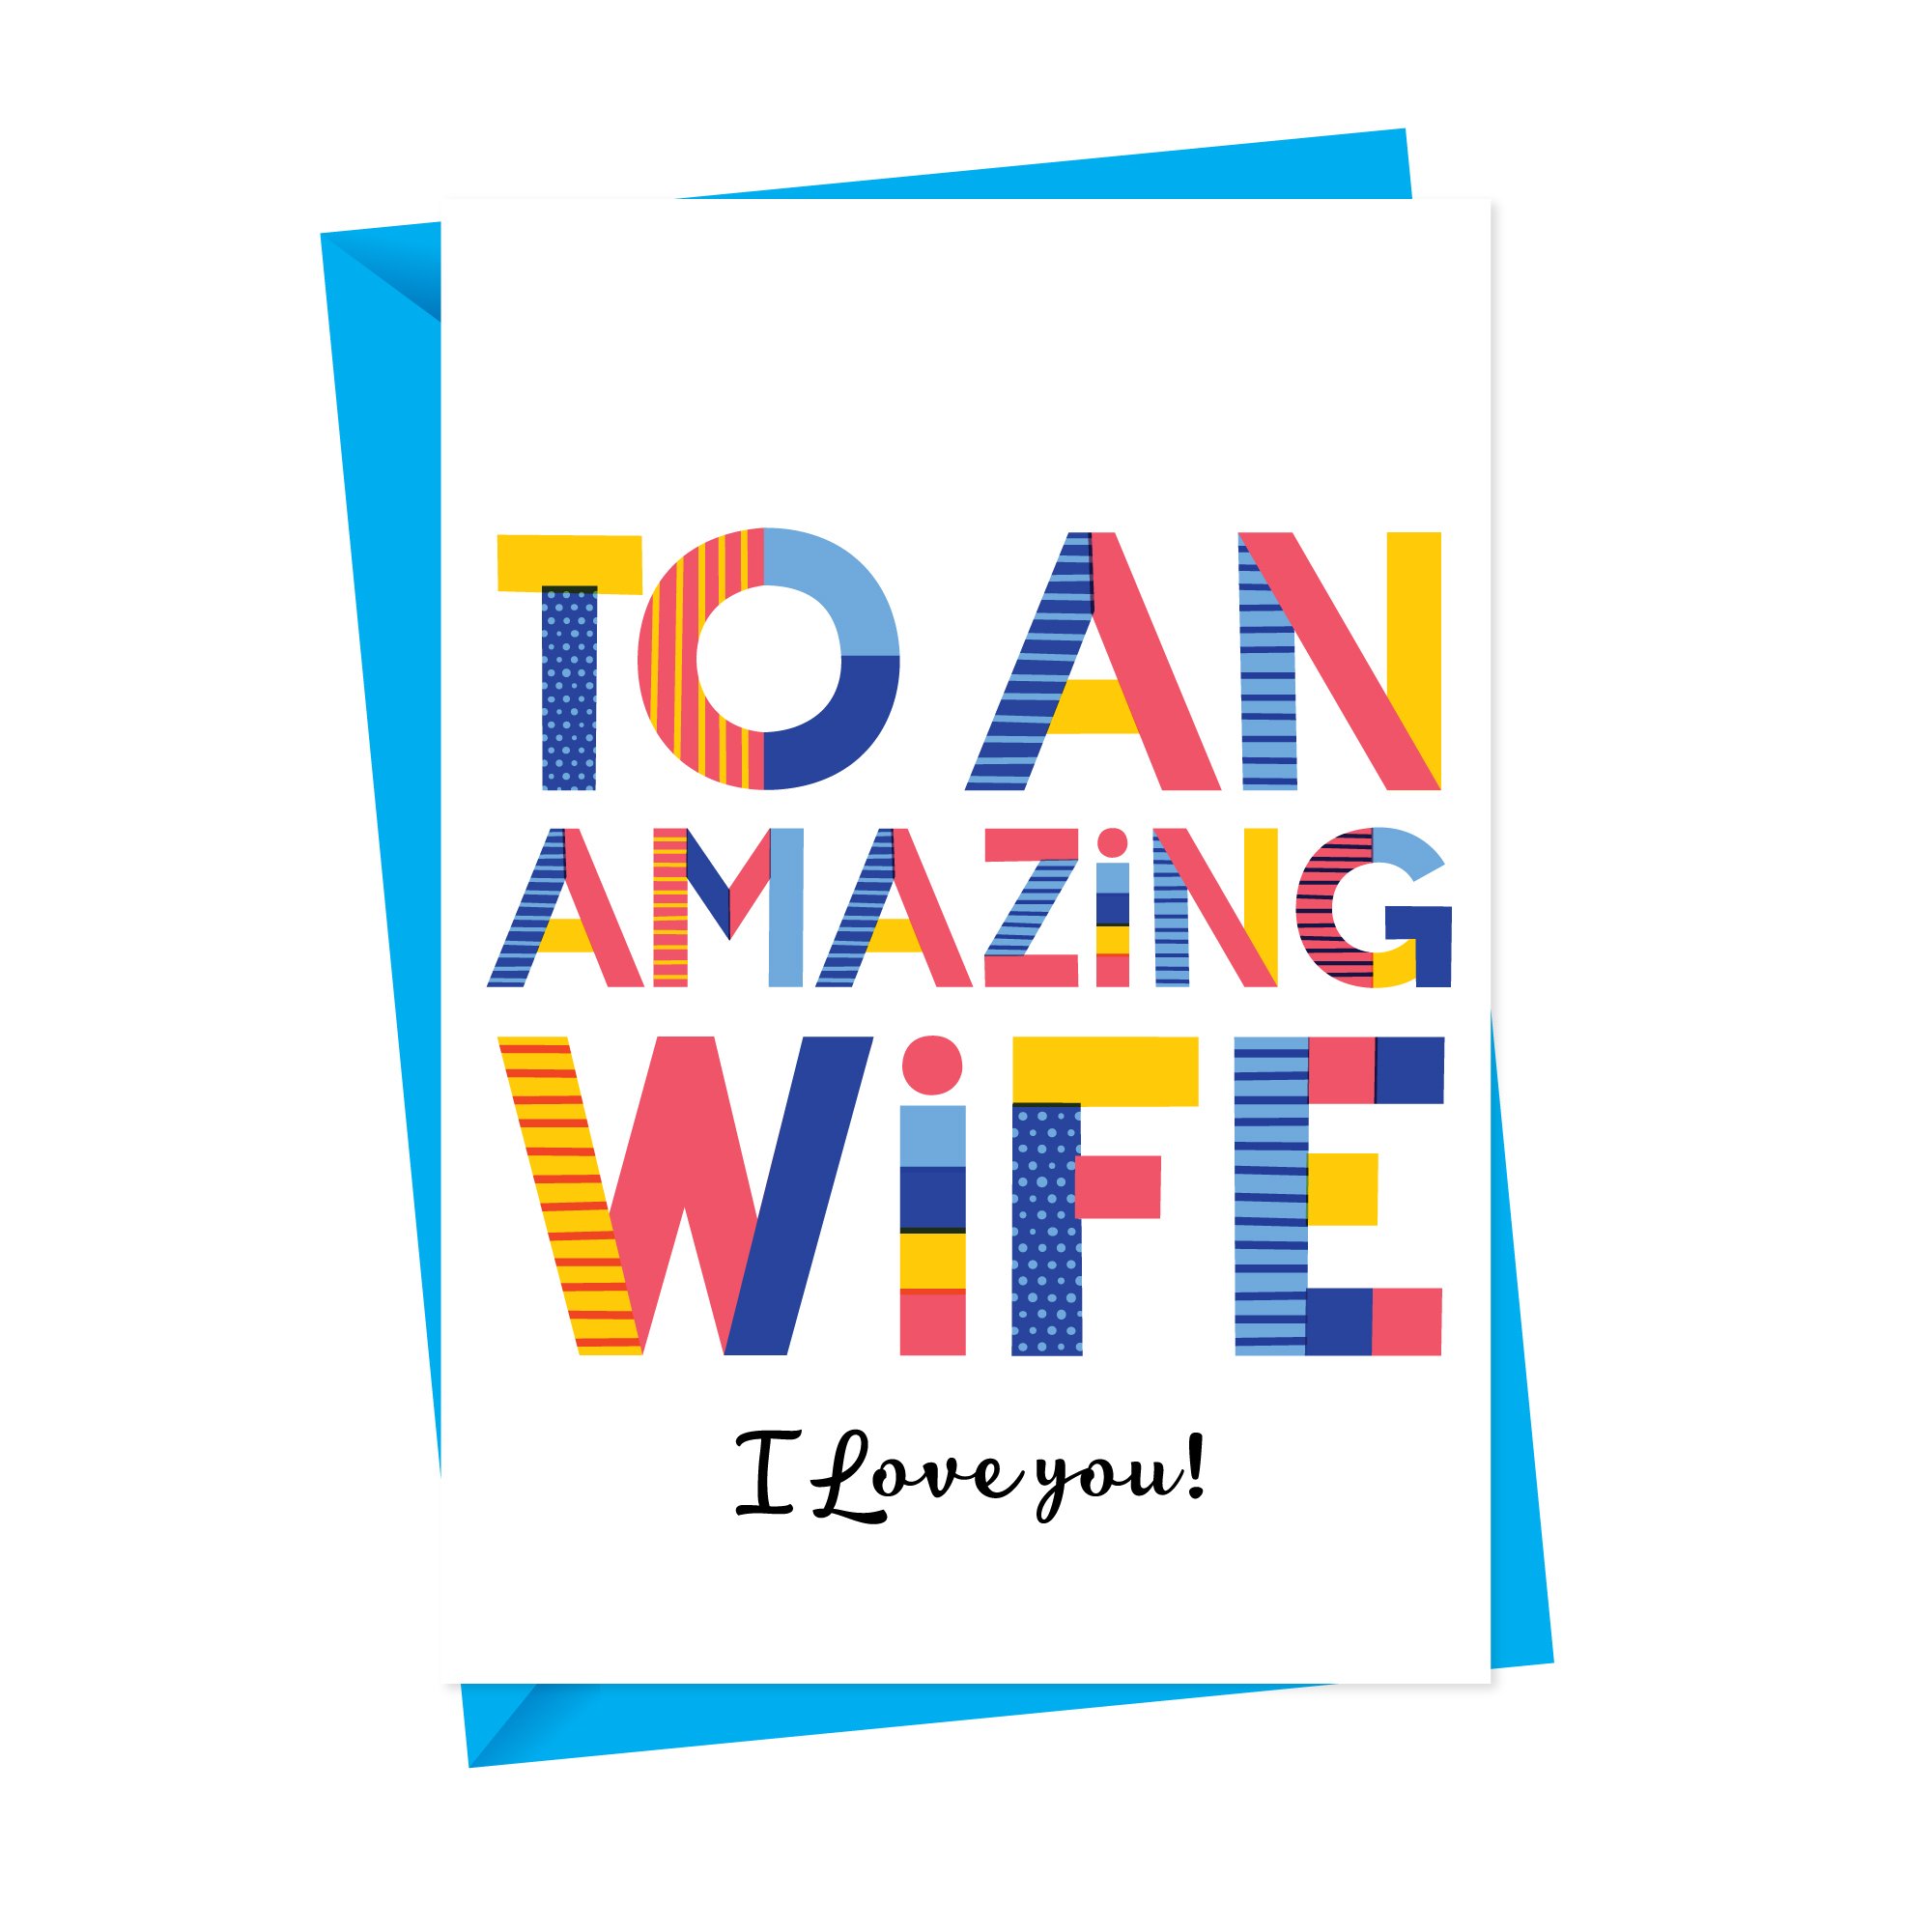 Amazing Wife card